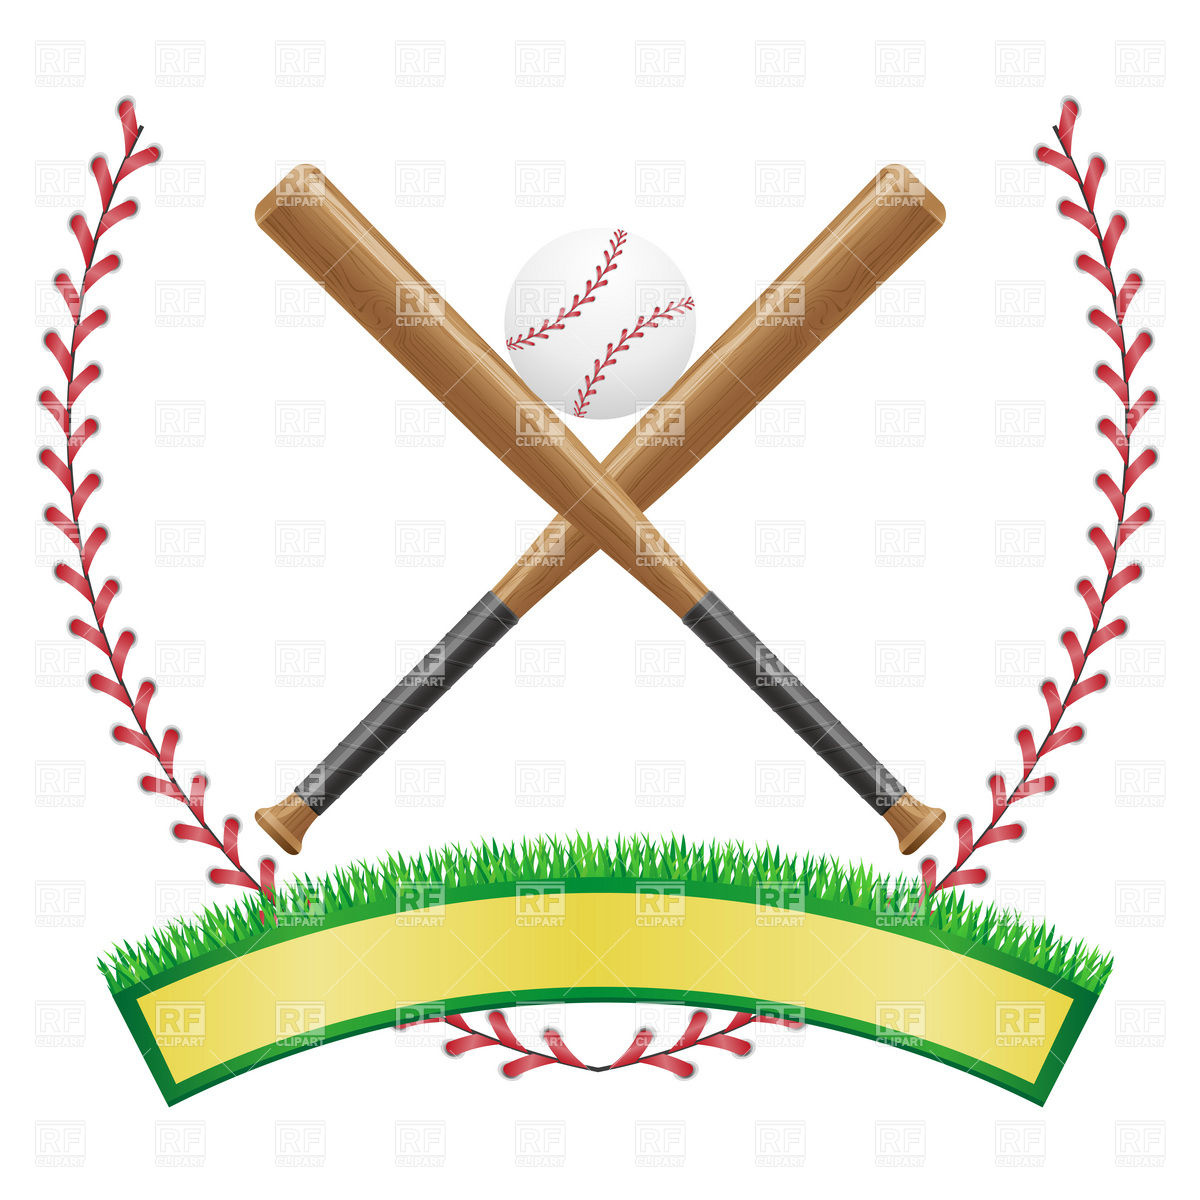 Baseball Emblem With Banner Ball And Baseball Bats 19097 Sport And